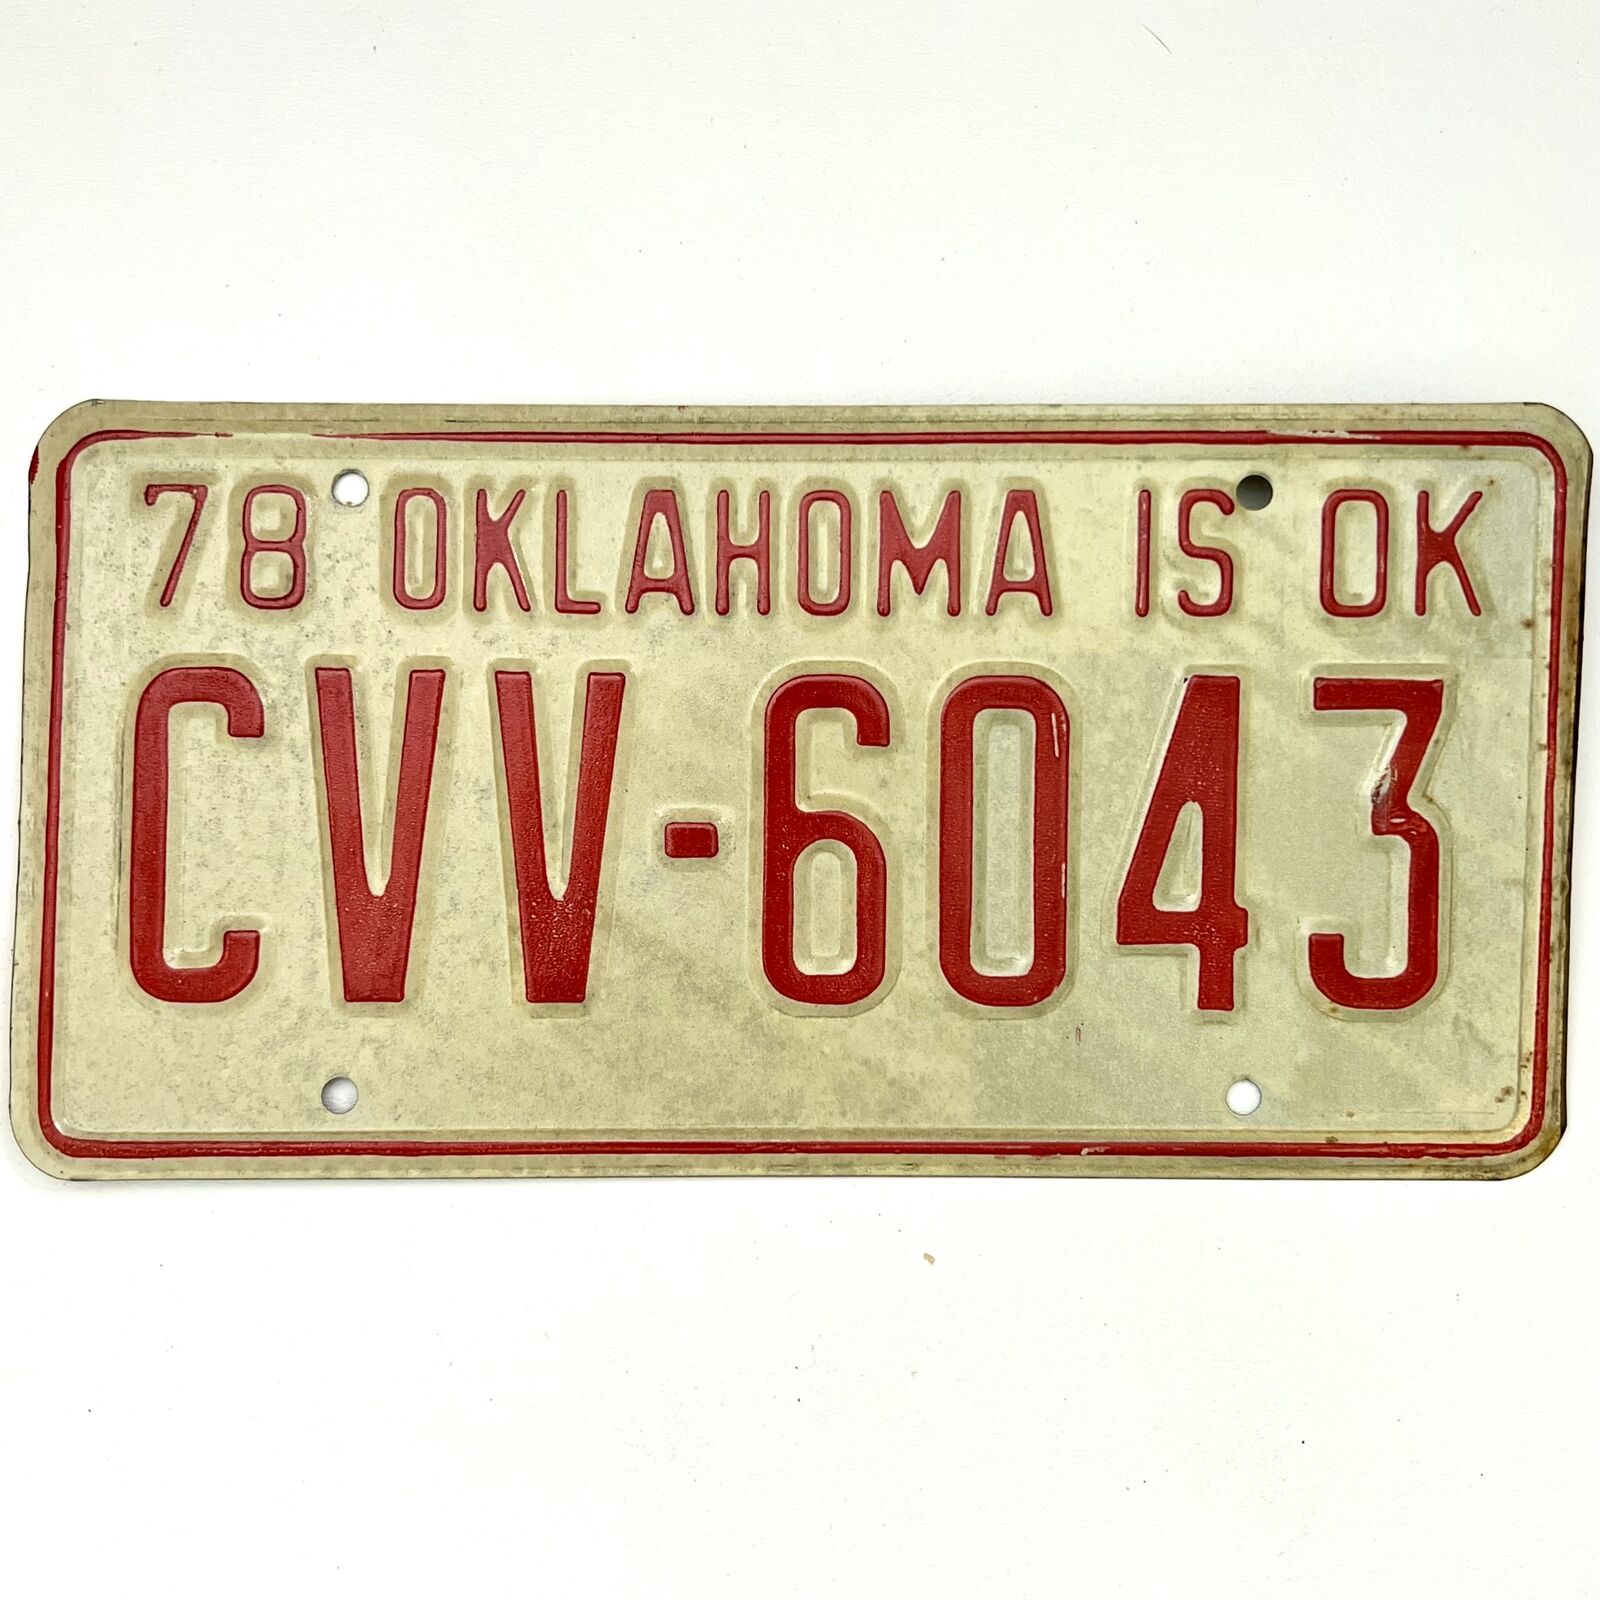 1978 United States Oklahoma Cleveland County Passenger License Plate CVV-6043